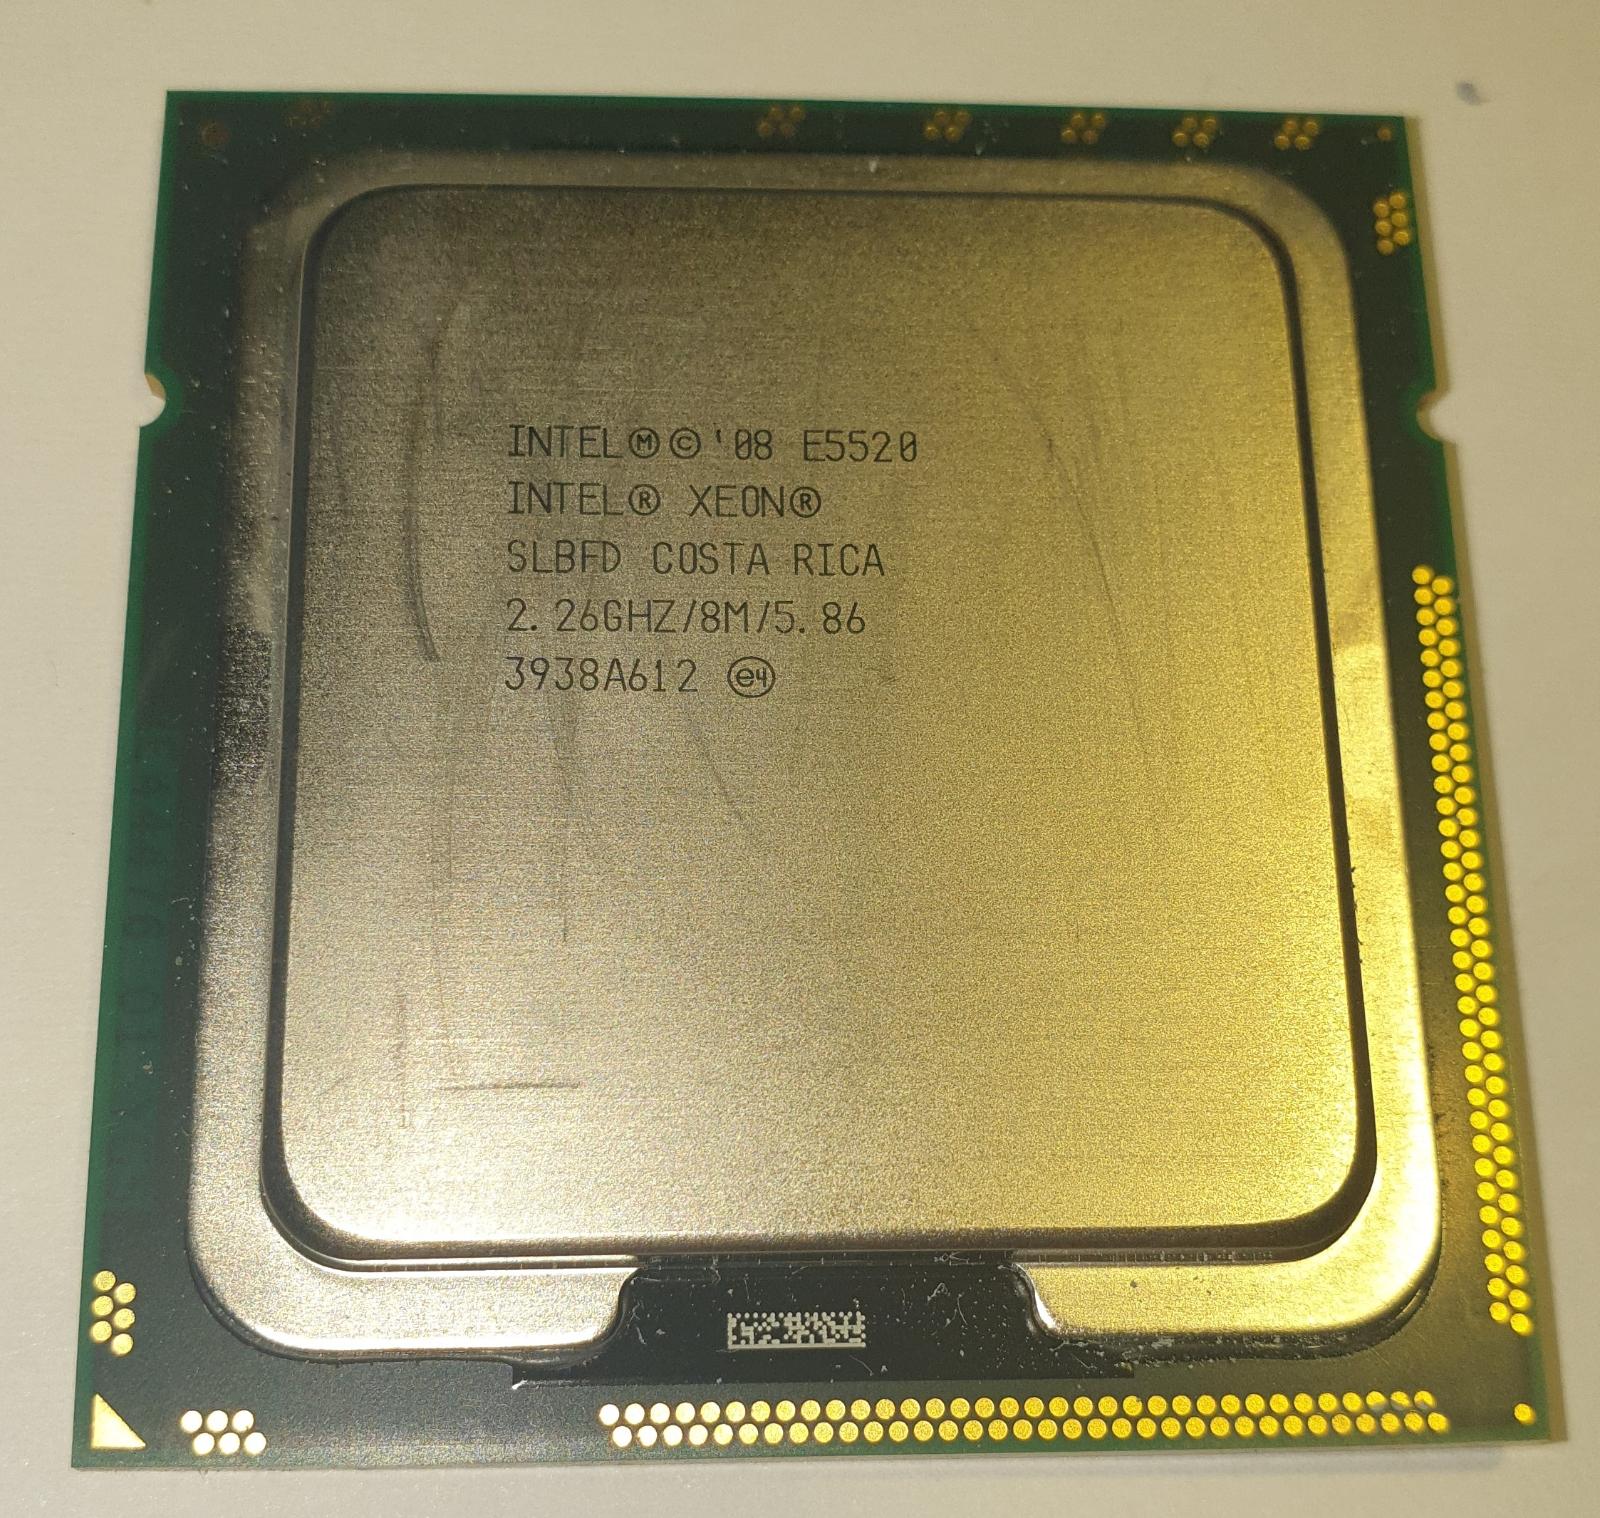 procesor do servera XEON E5520 - Počítače a hry